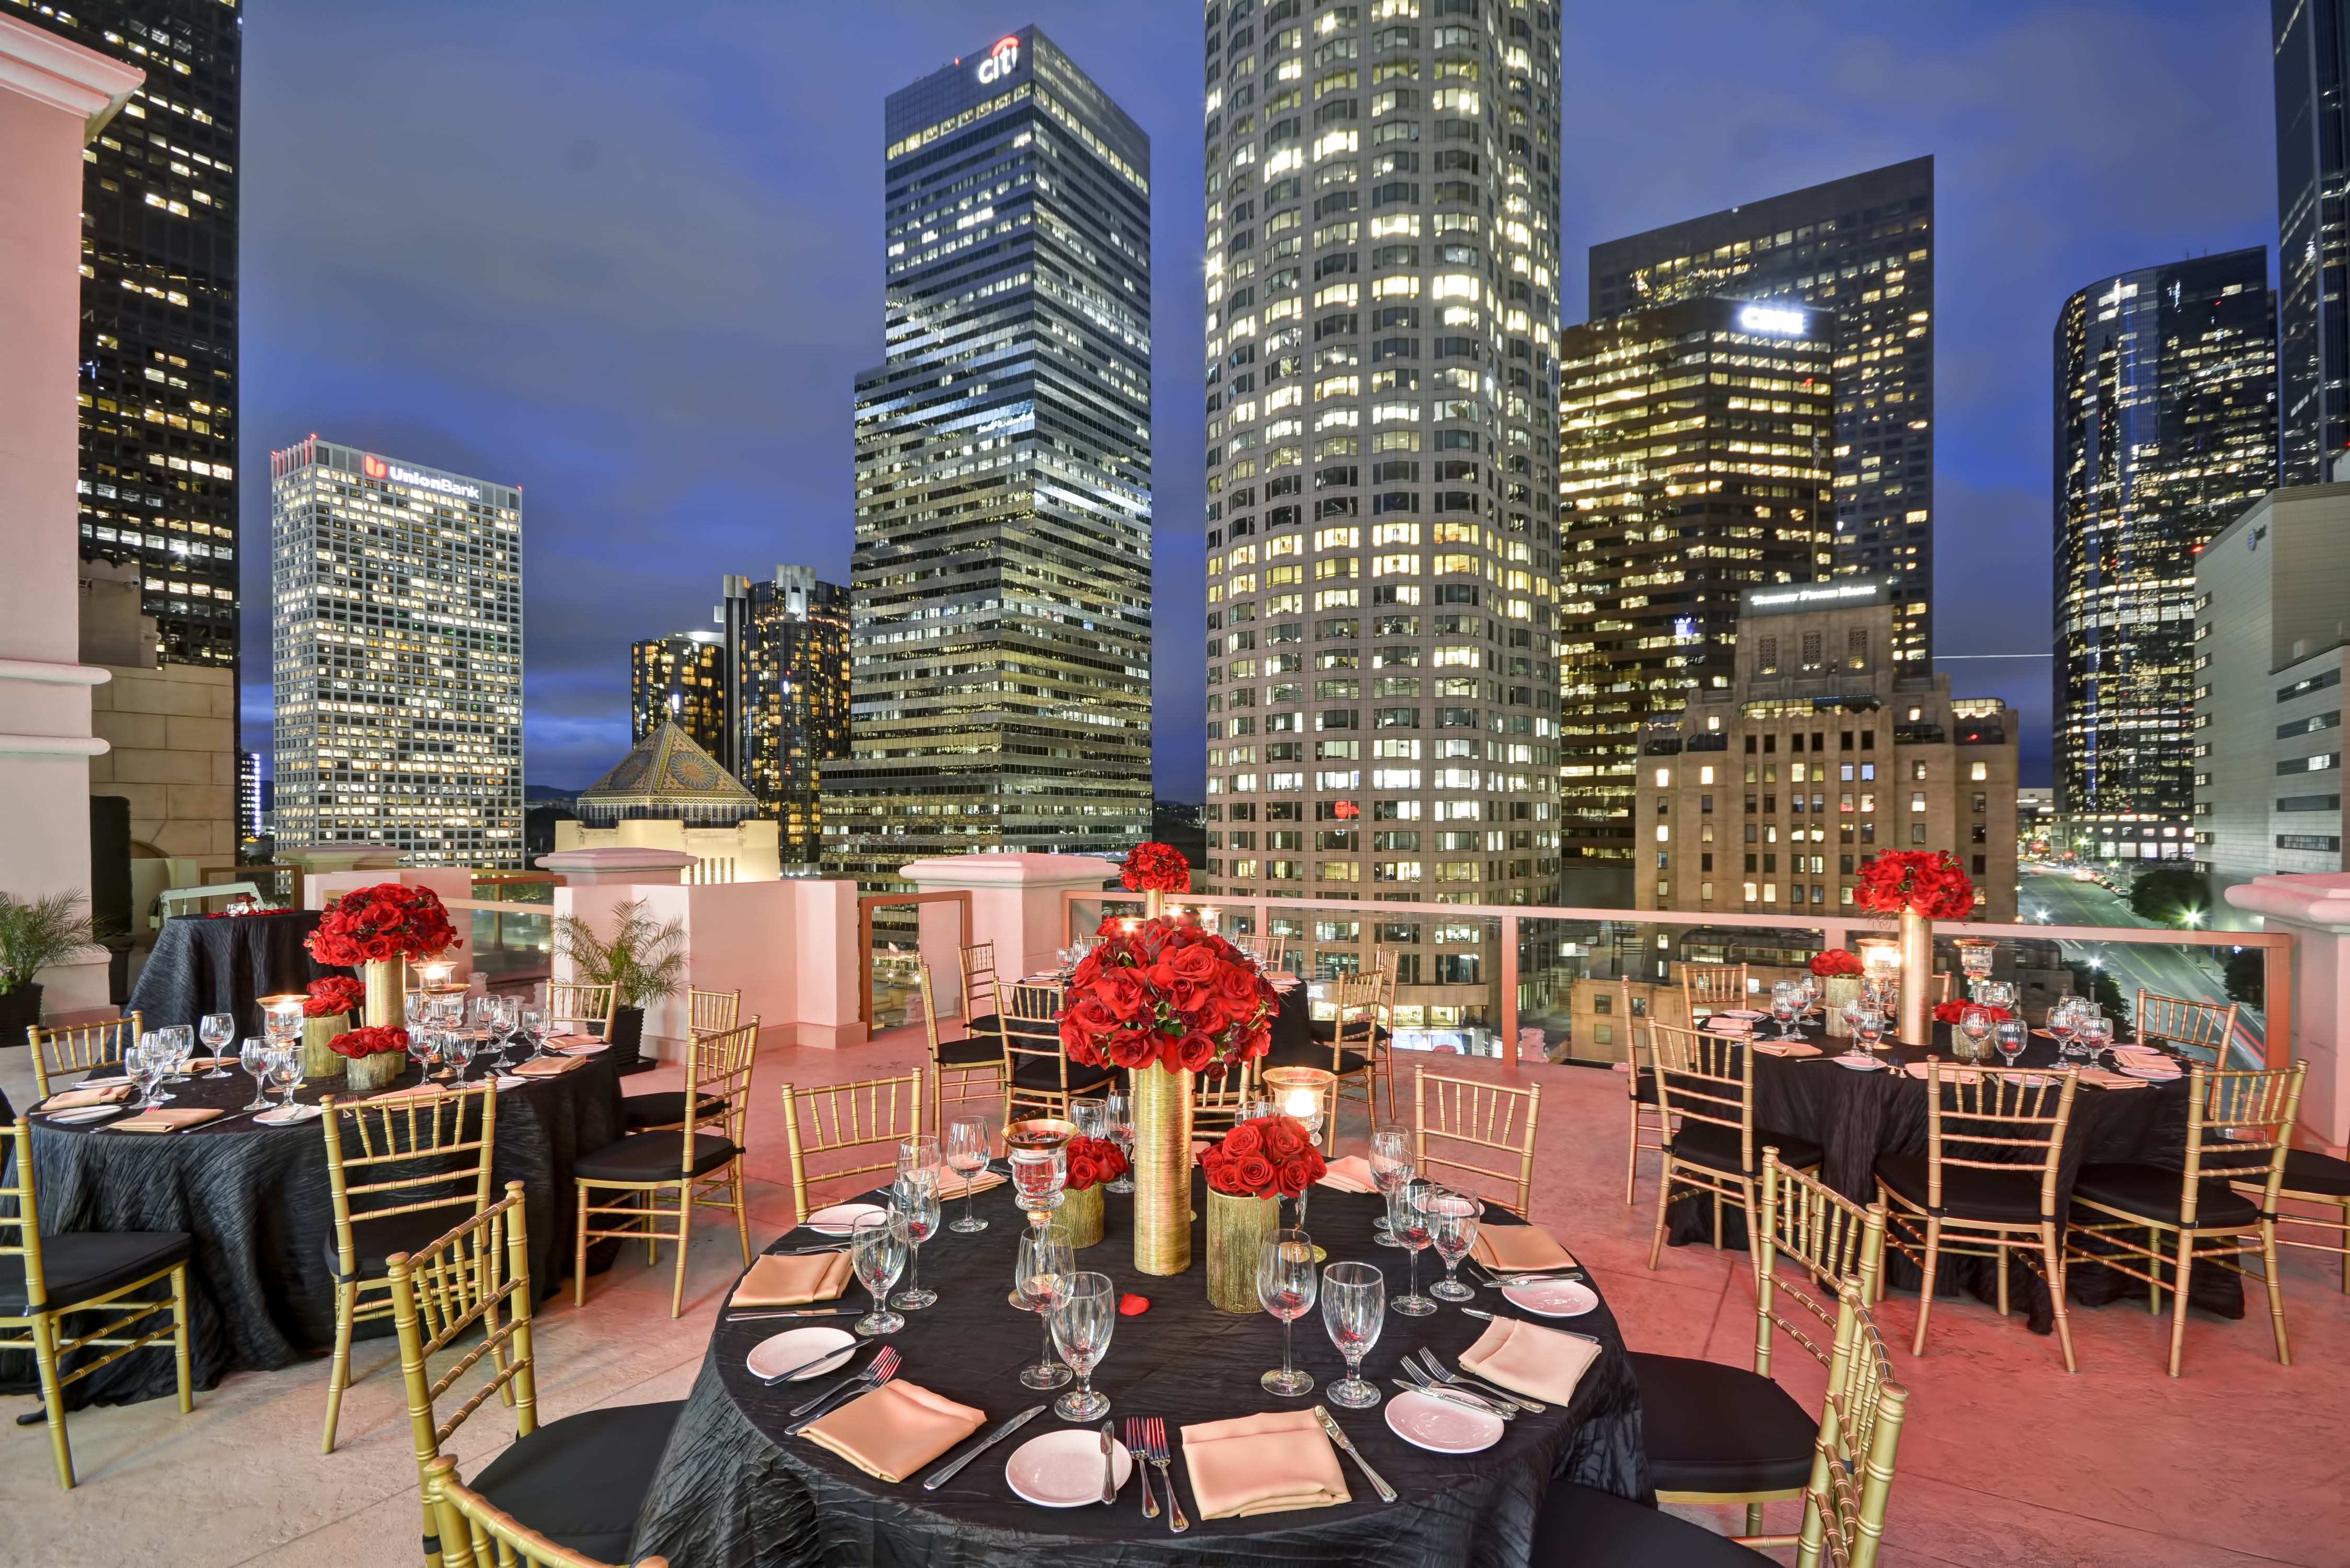 Hilton Checkers Los Angeles Rooftop Venue at Night